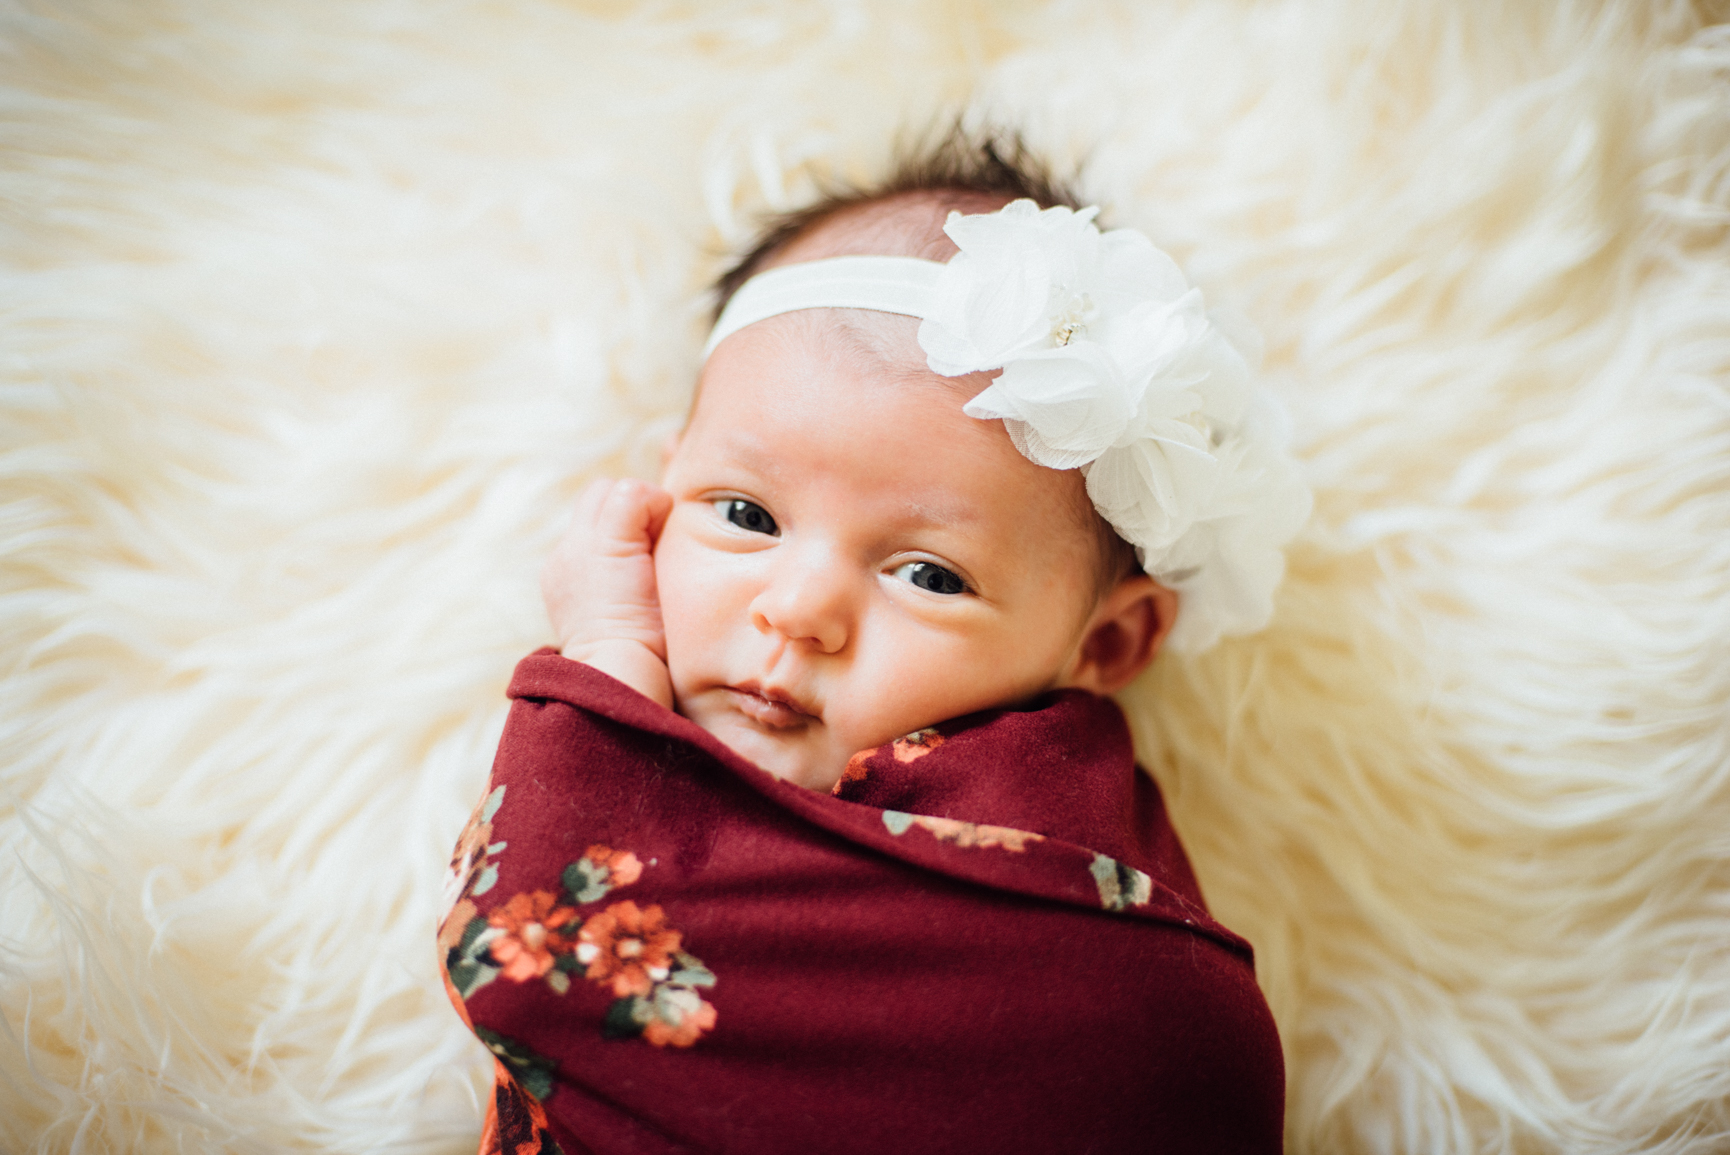 Everly Rose Newborn Photos by Roxy Hutton of CGScreative & CityGirlSearching (1 of 1).jpg